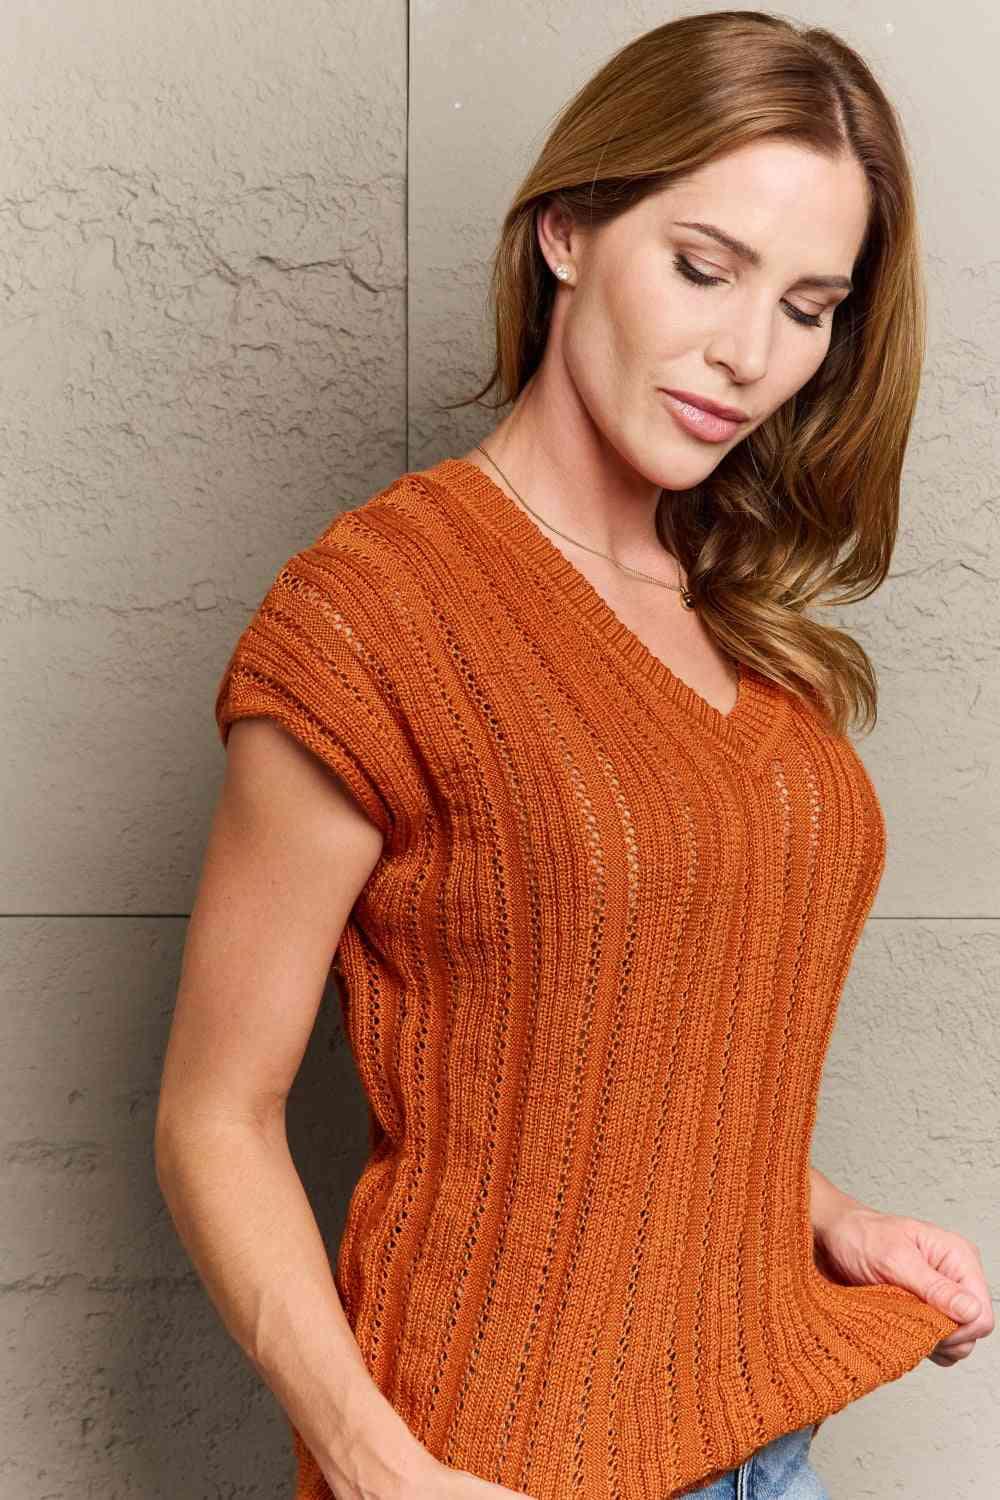 Sew In Love Full Size Preppy Casual Knit Sweater Vest - Immenzive